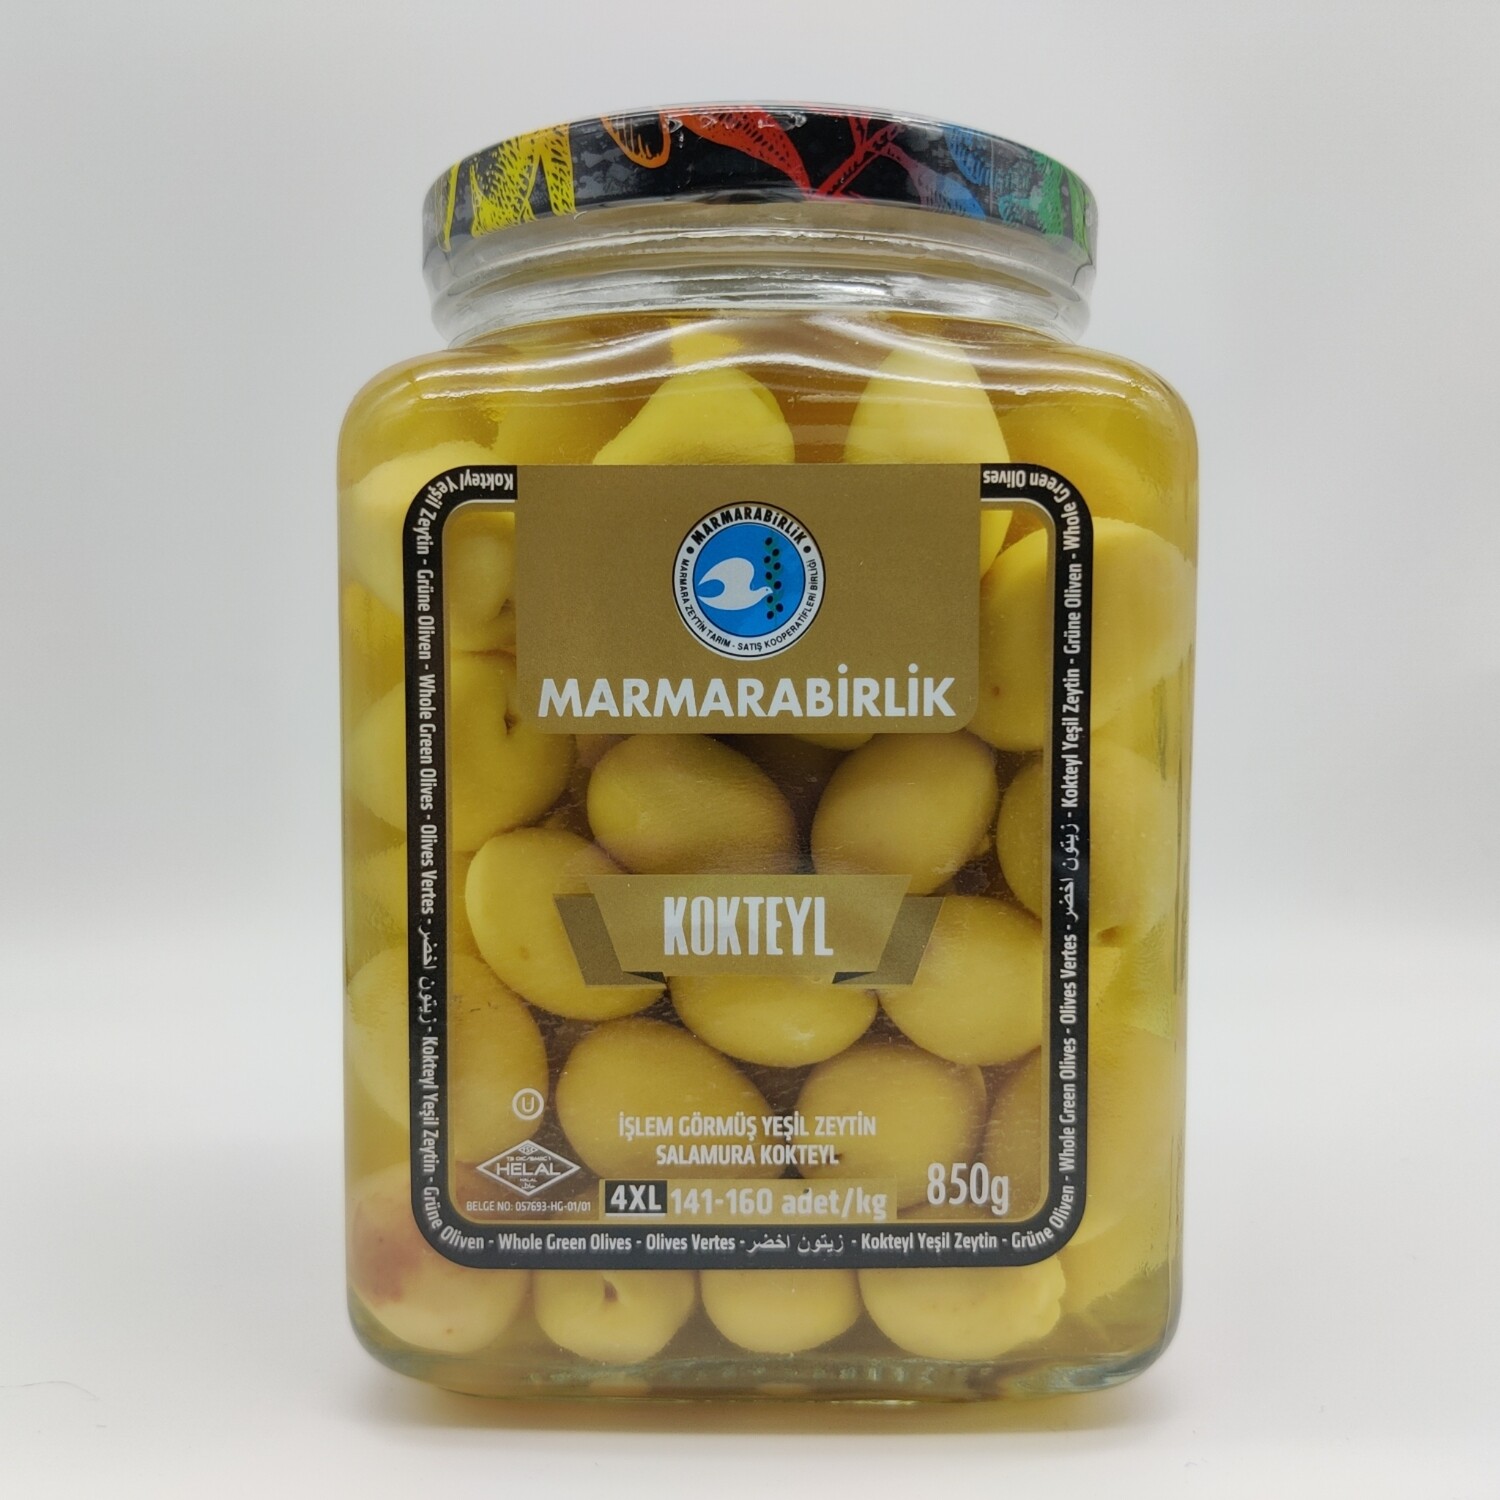 MB Marmara Birlik Green Olives 4XL Whole (Kokteyl 141-160) 850g Glass